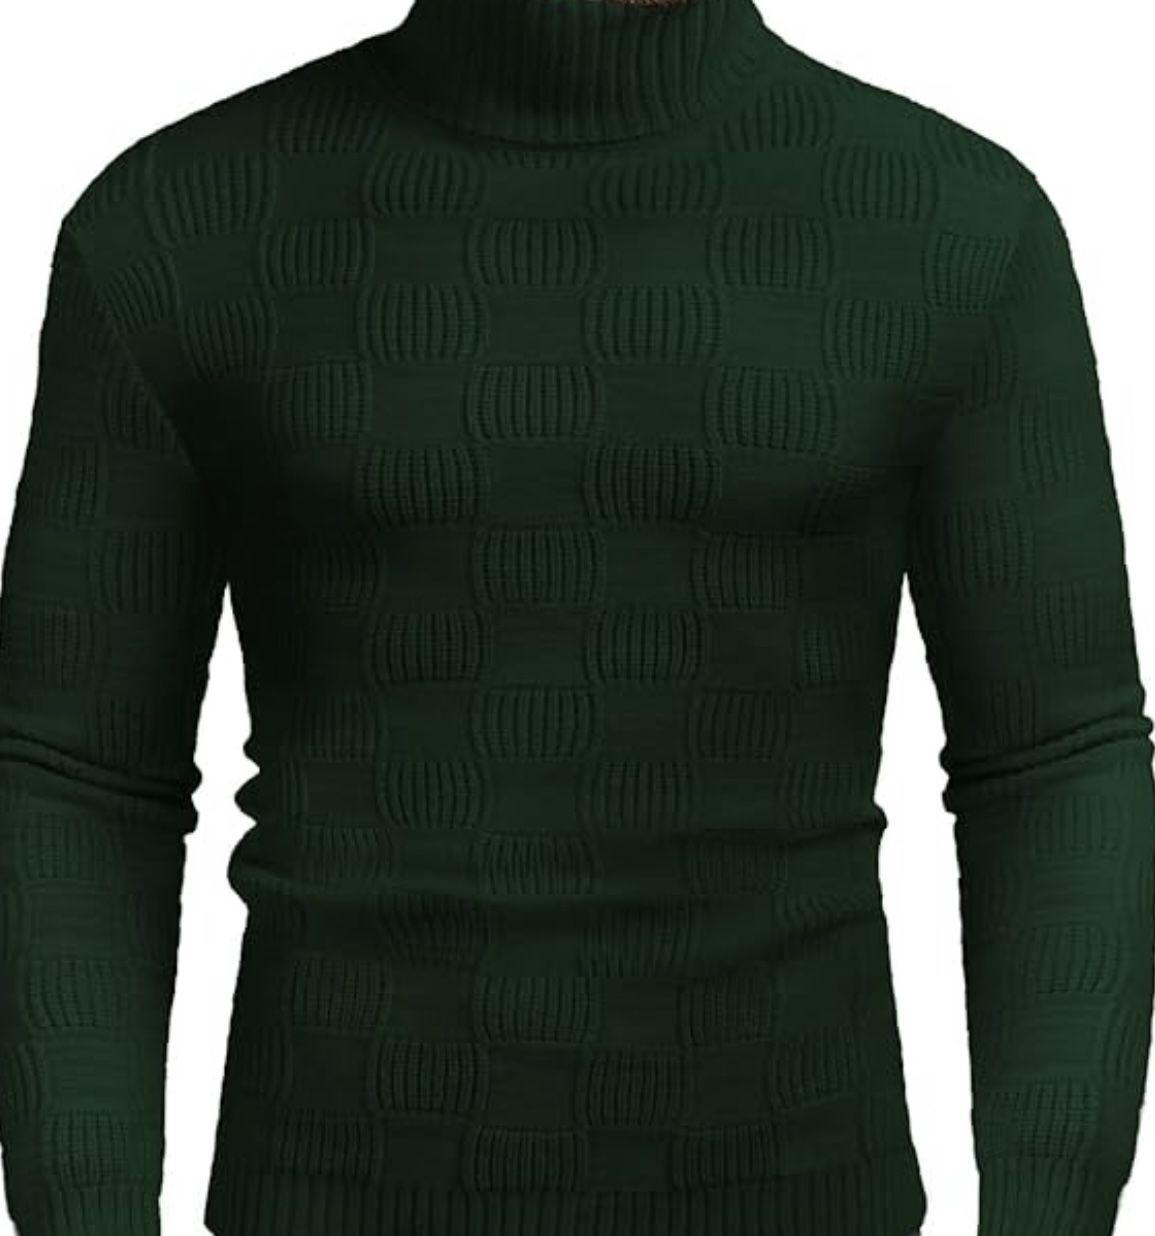 COOFANDY Men's Knitted Turtleneck Sweater Plaid Hightneck Long Sleeve Sweater